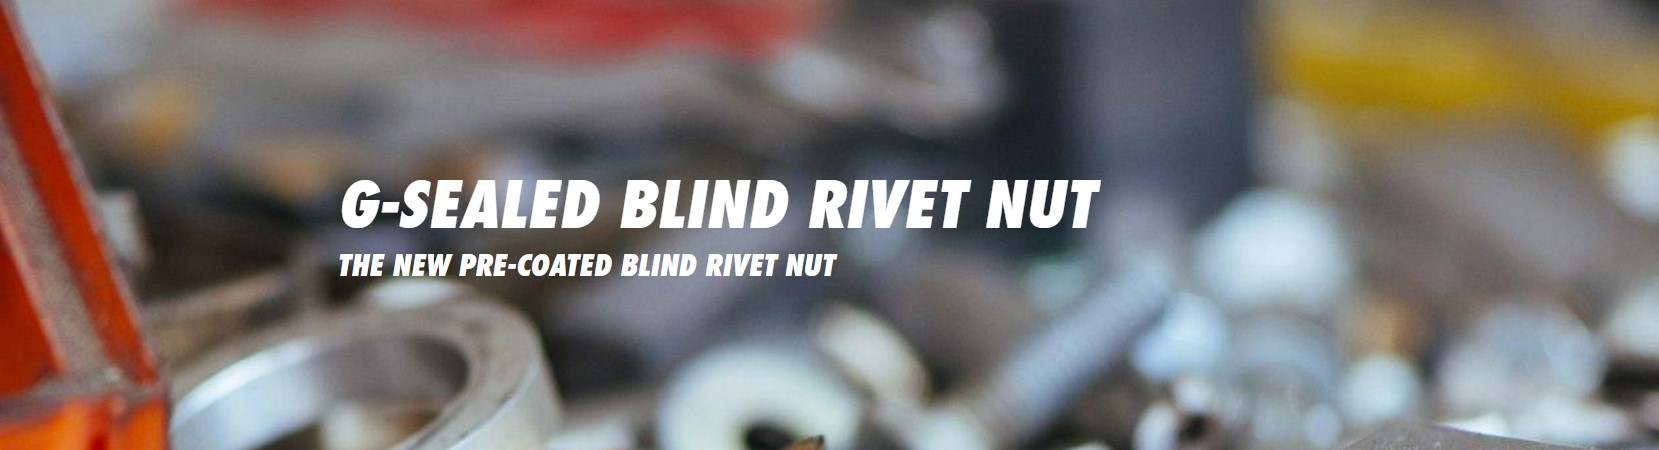 G-SEALED BLIND RIVET NUT